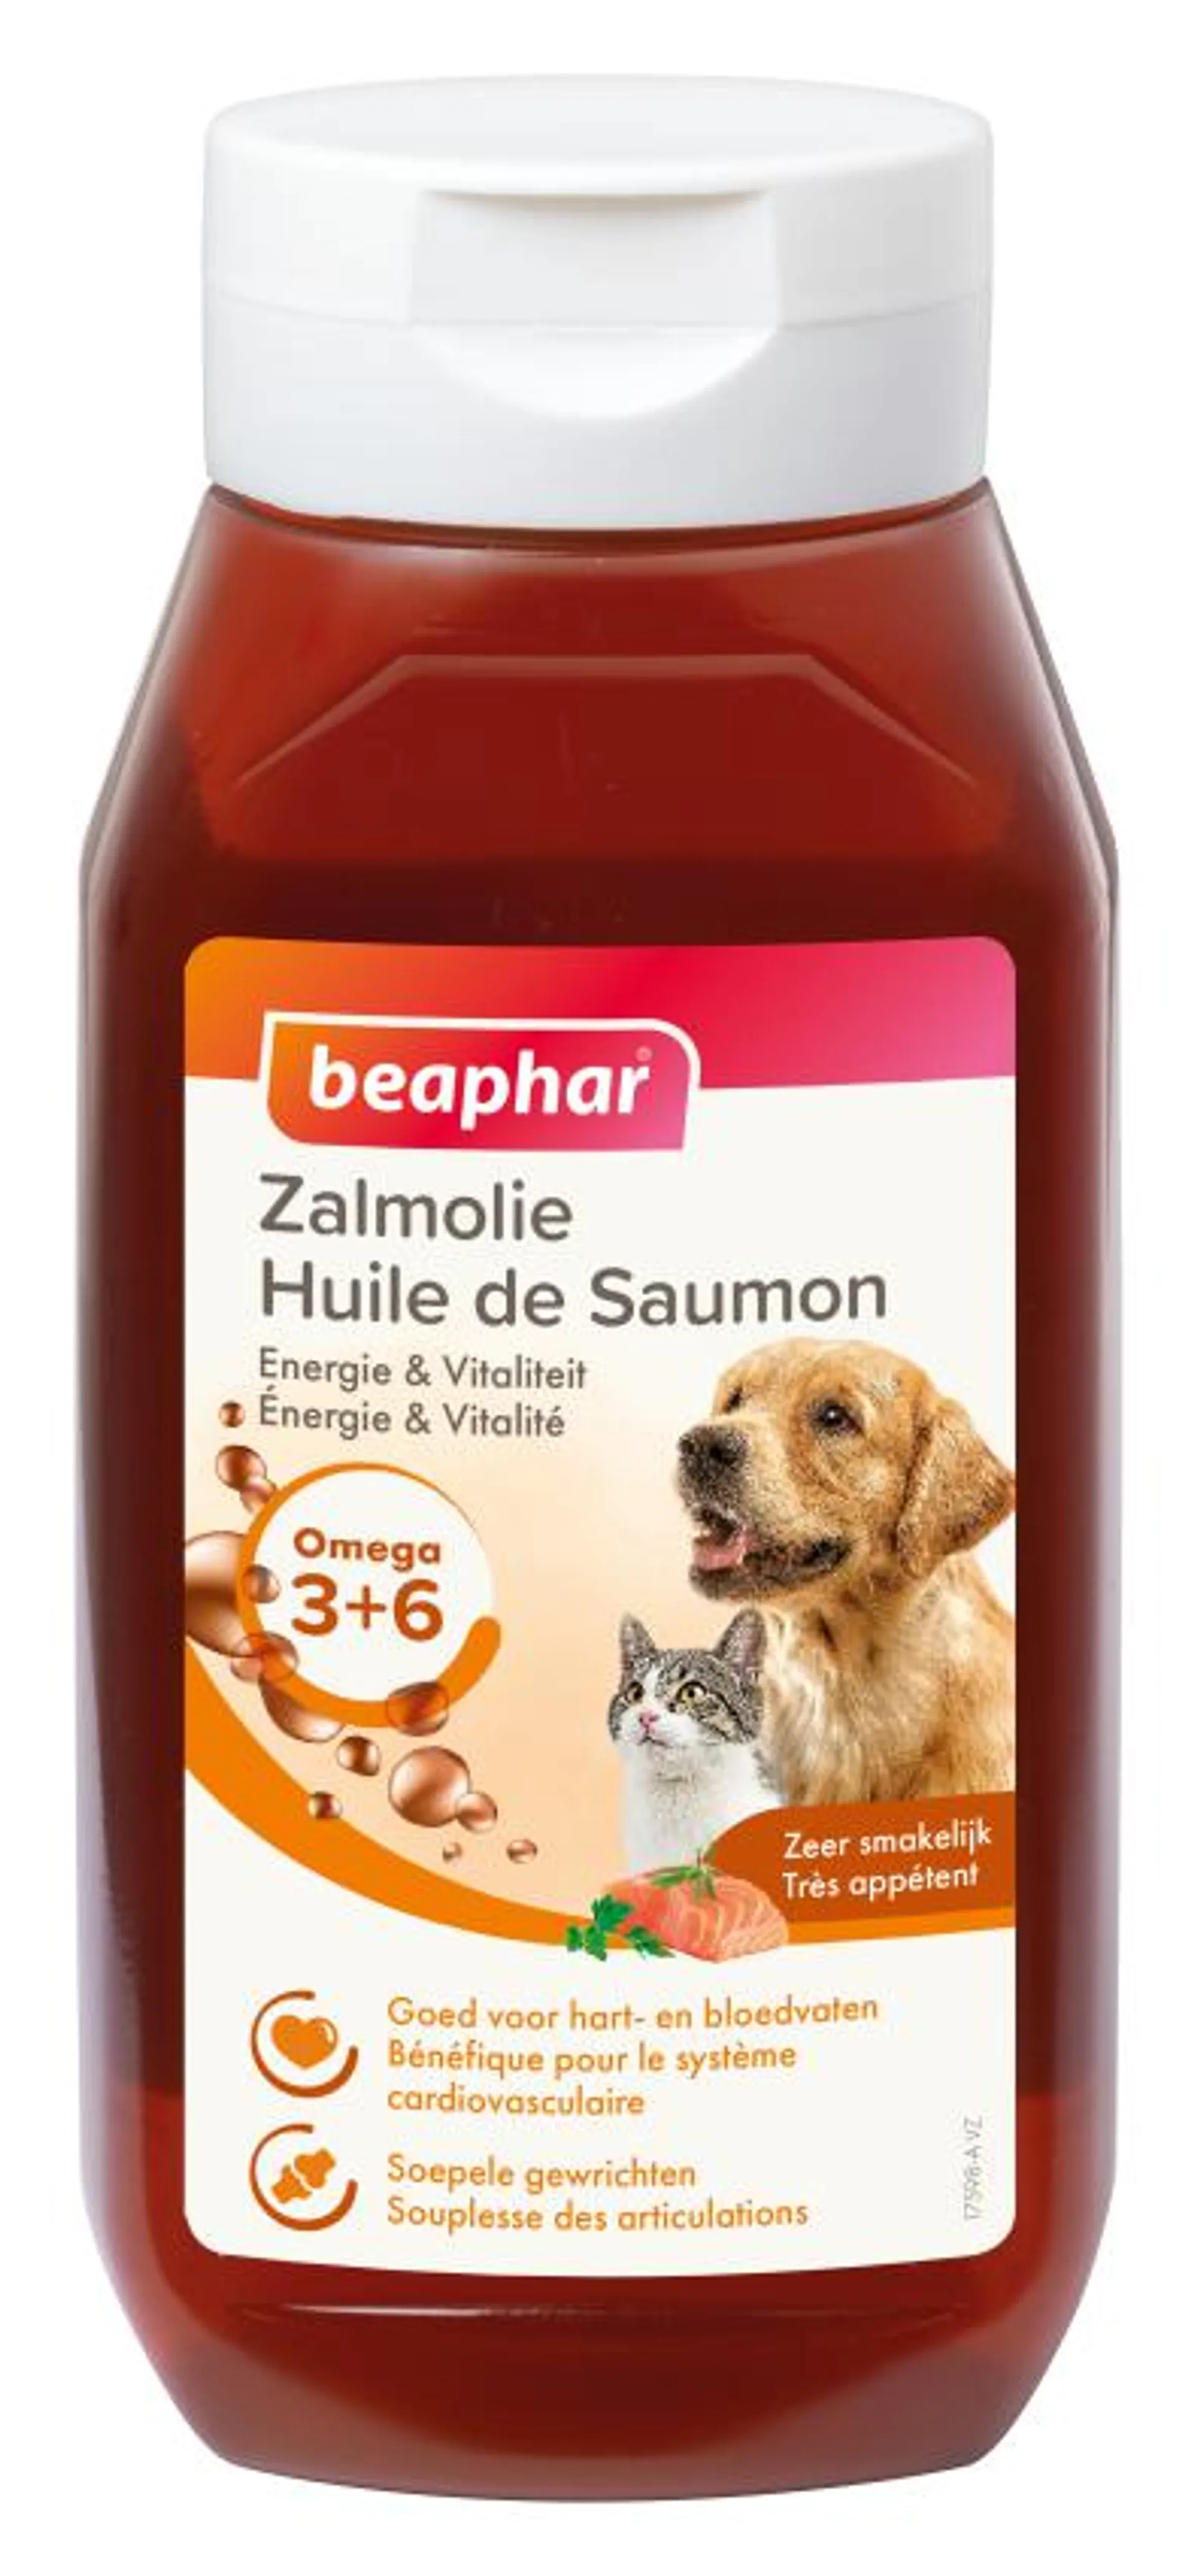 Beaphar huile de saumon 430ml